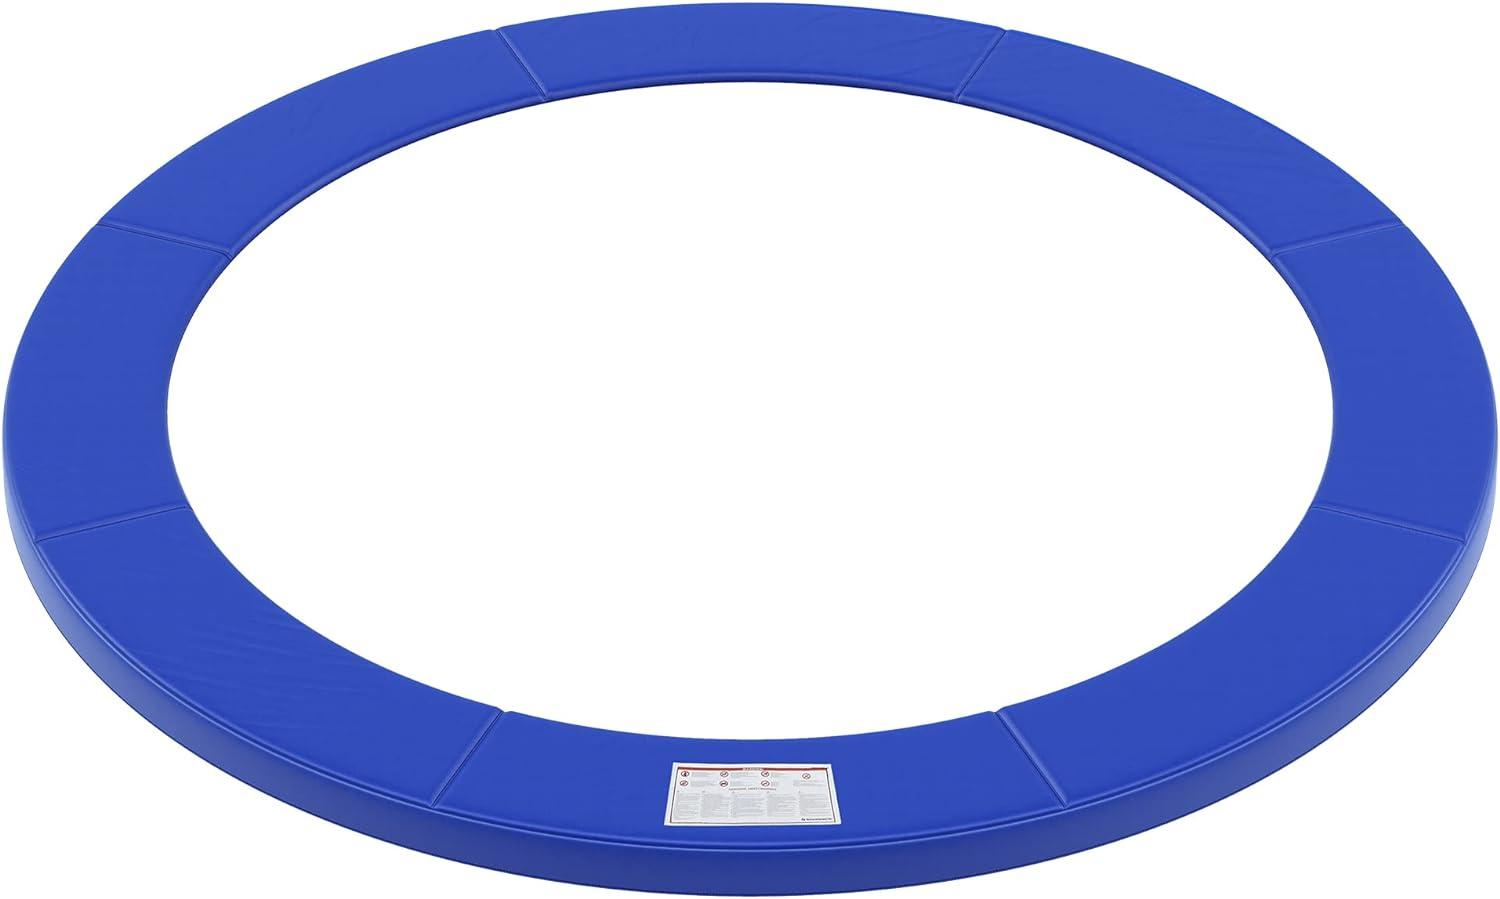 SONGMICS Trampolin Randabdeckung, 100% UV-beständig Reißfest Federabdeckung, blau, Ø366cm Bild 1